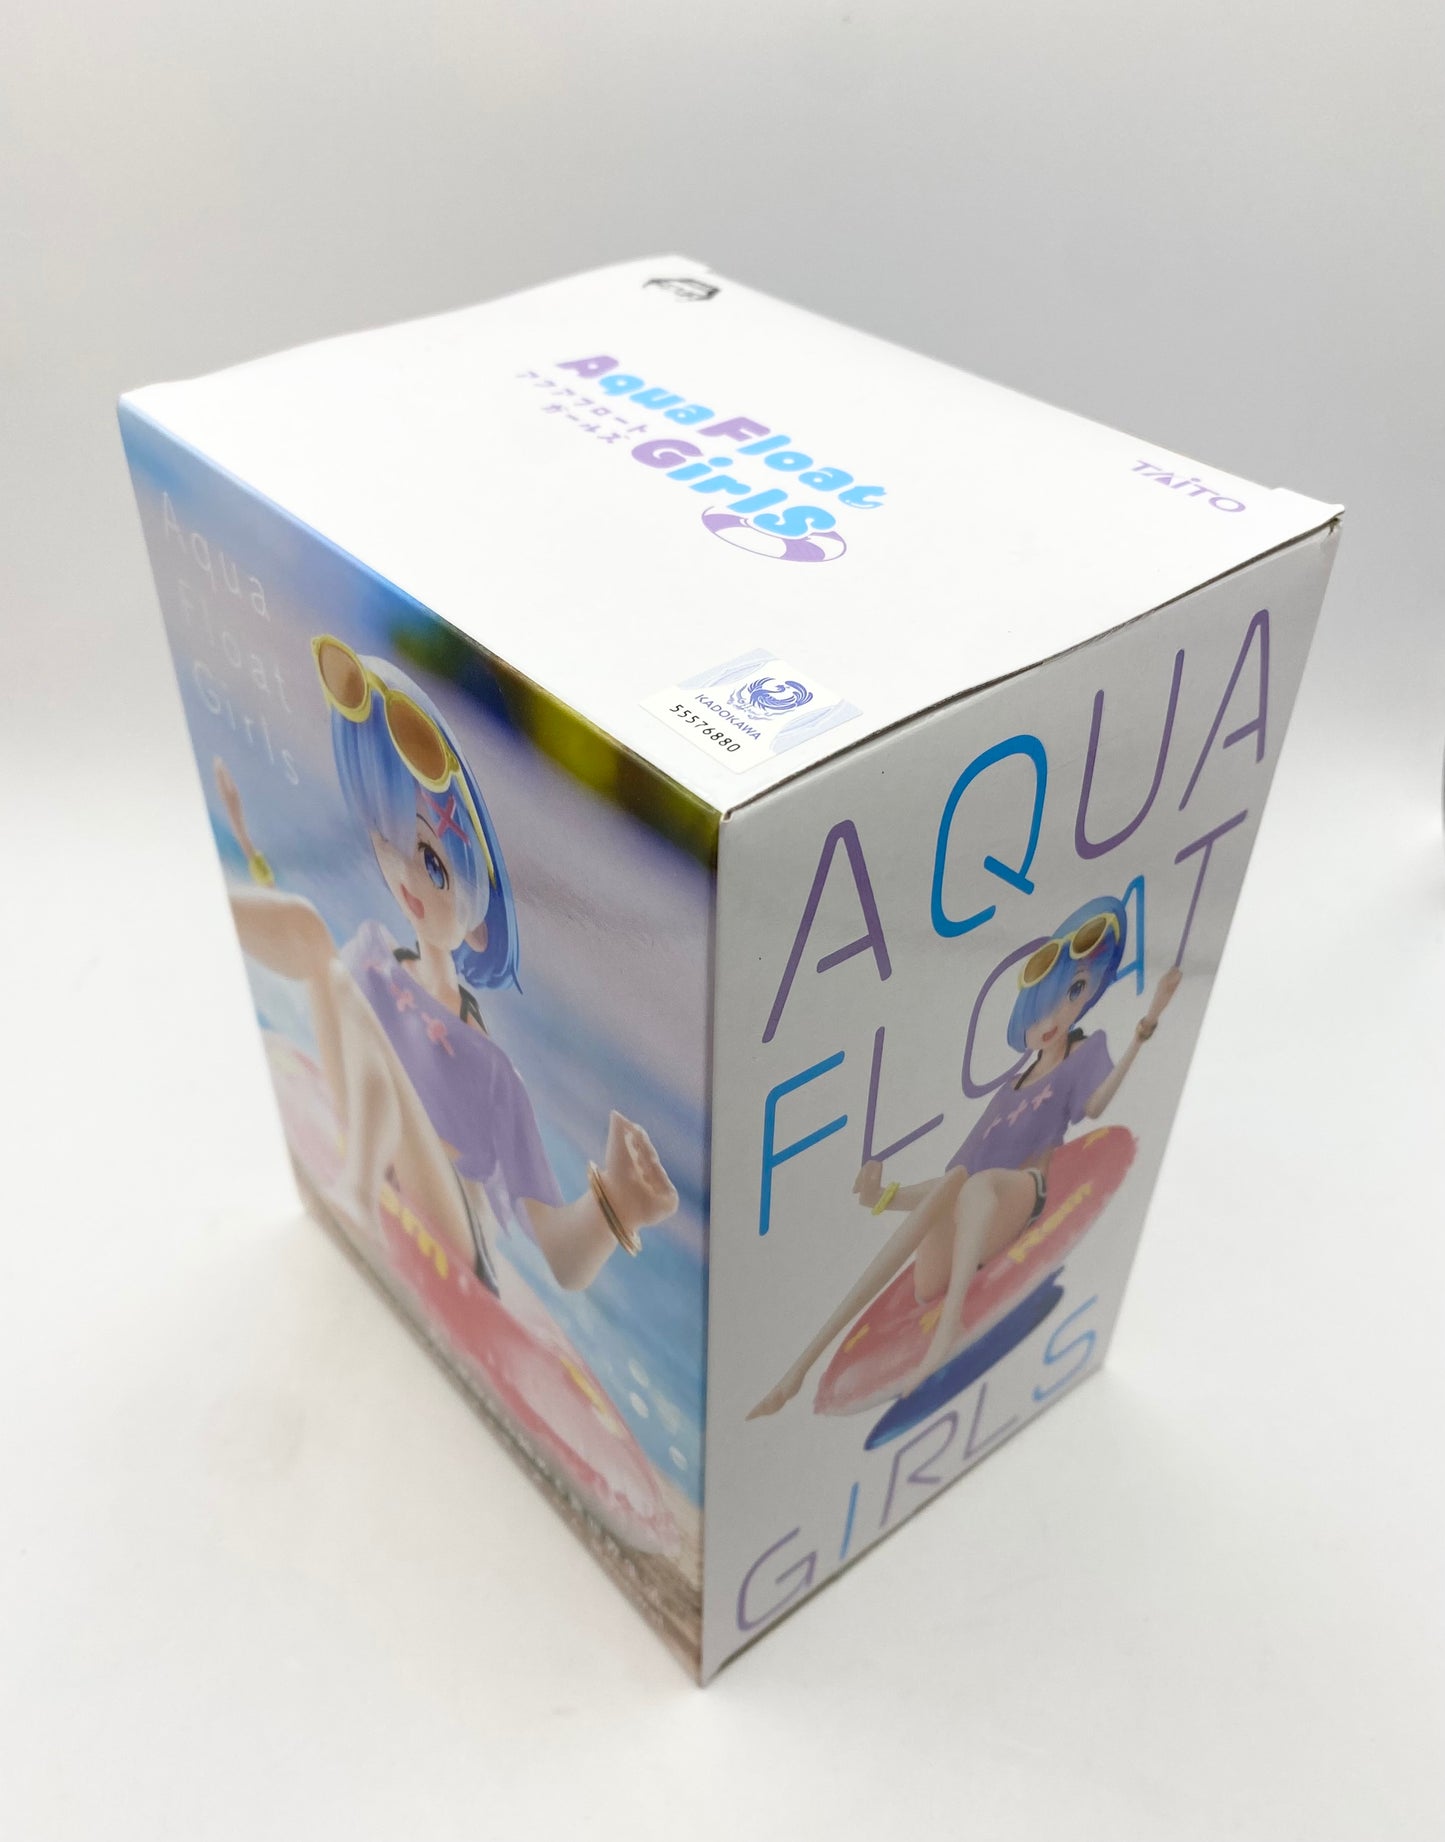 Re:Zero Aqua Float Girls Renewal REM Taito